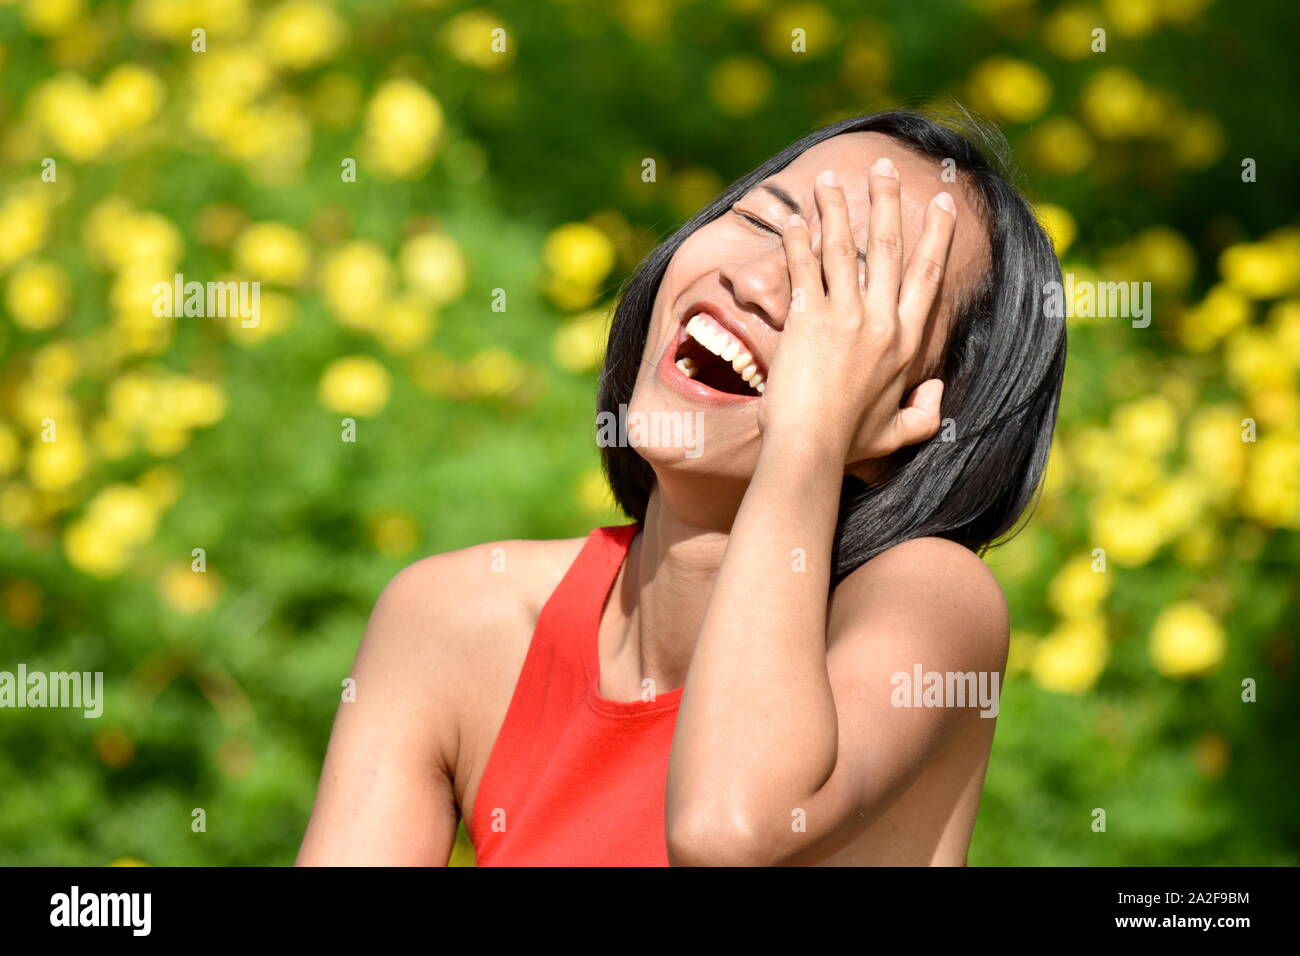 A Minority Female Laughing Stock Photo